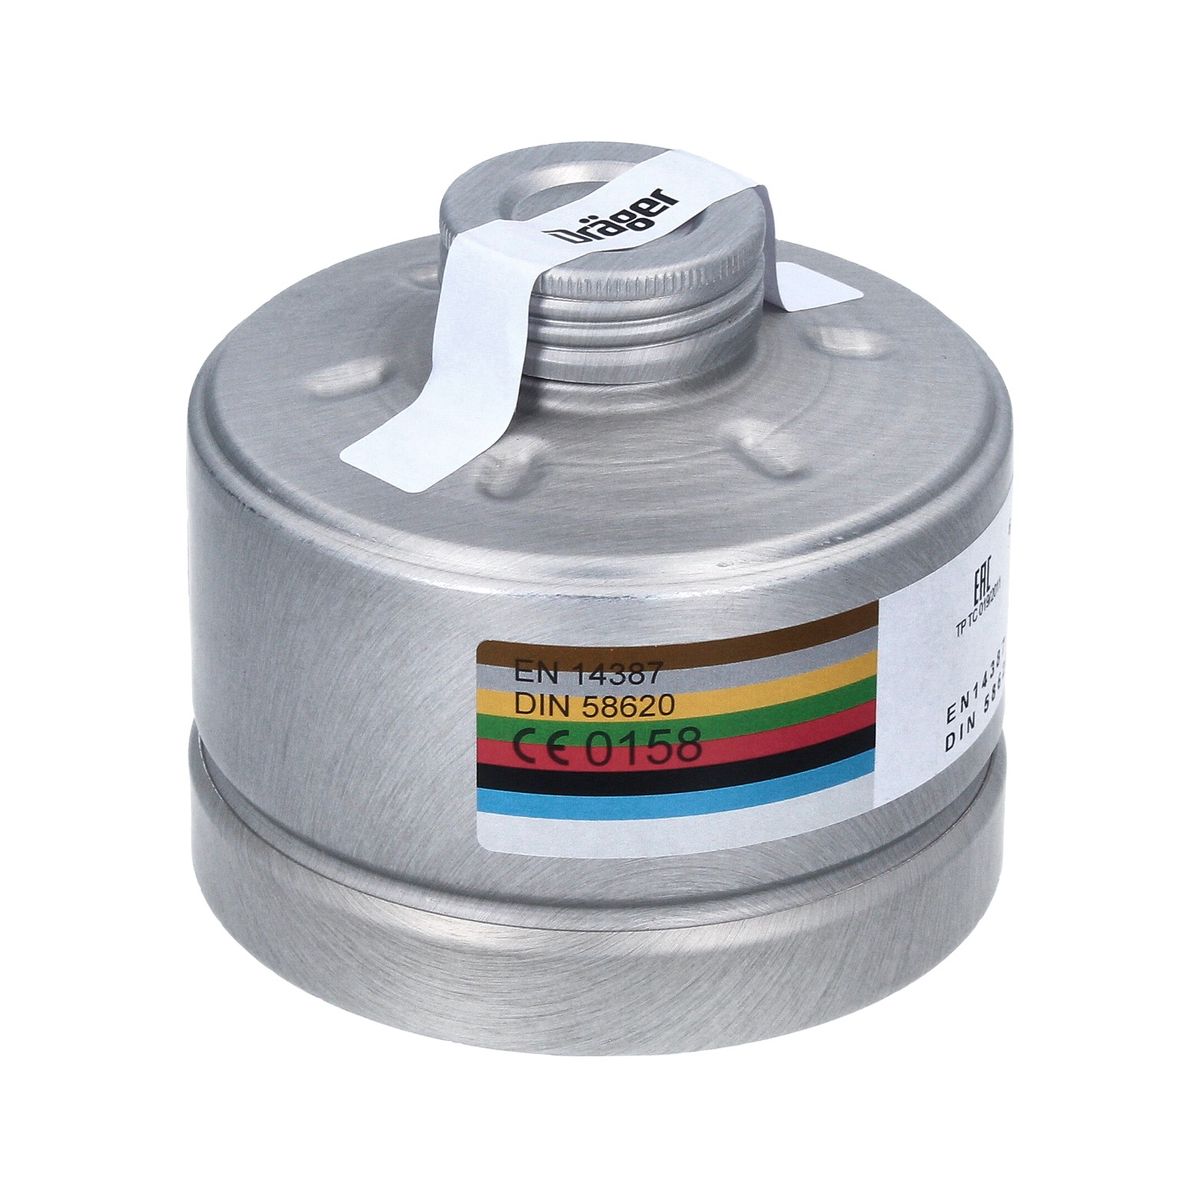 Filtre de protection respiratoire Dräger X-plore Rd40 2x A1B2E2K1 Hg CO NO-P3 RD (2x 6738801) EN148-1 pour